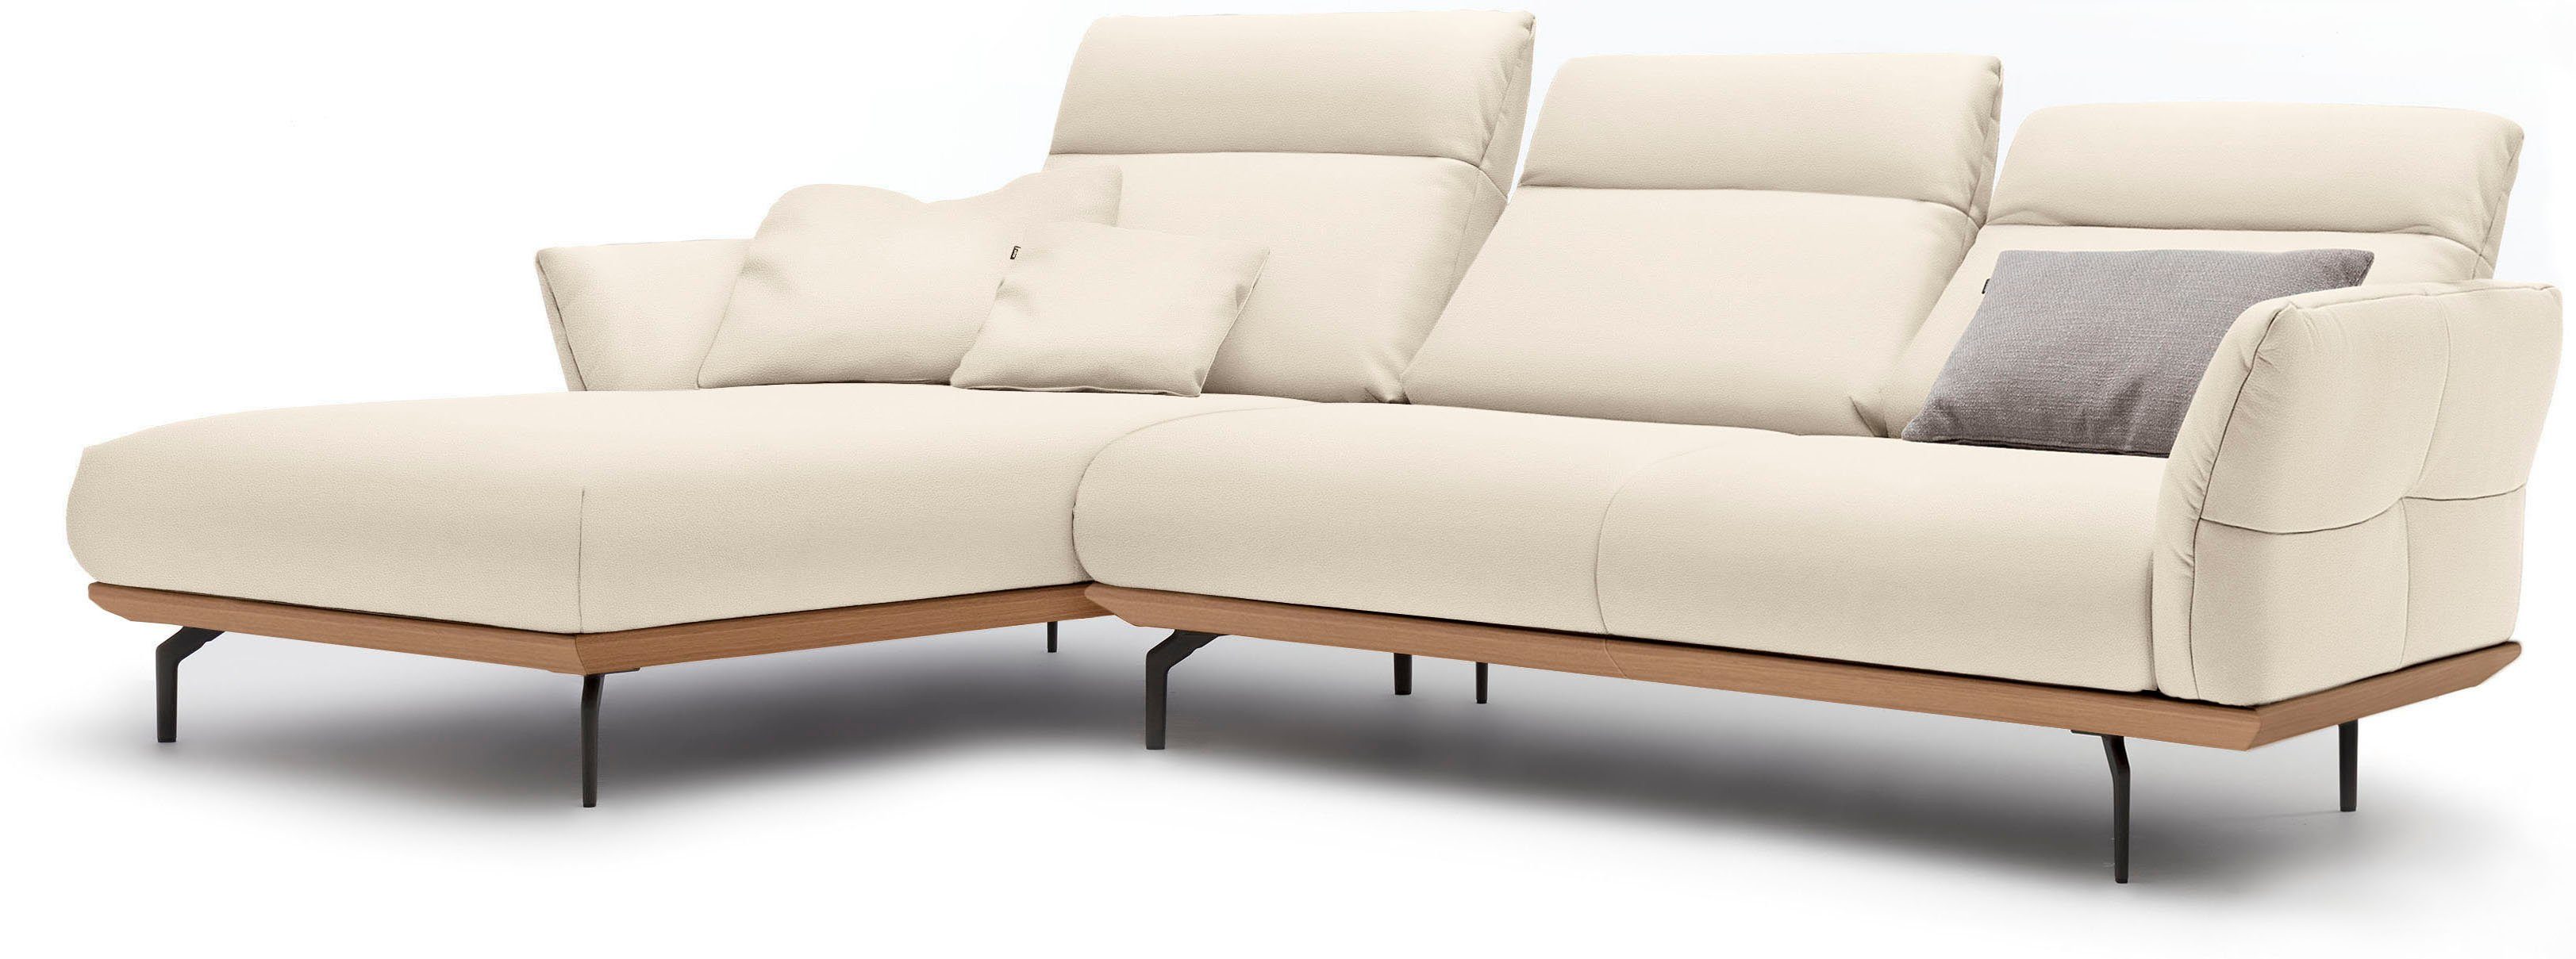 sofa 298 in Sockel Breite umbragrau, in hs.460, Eiche, cm Ecksofa Alugussfüße hülsta